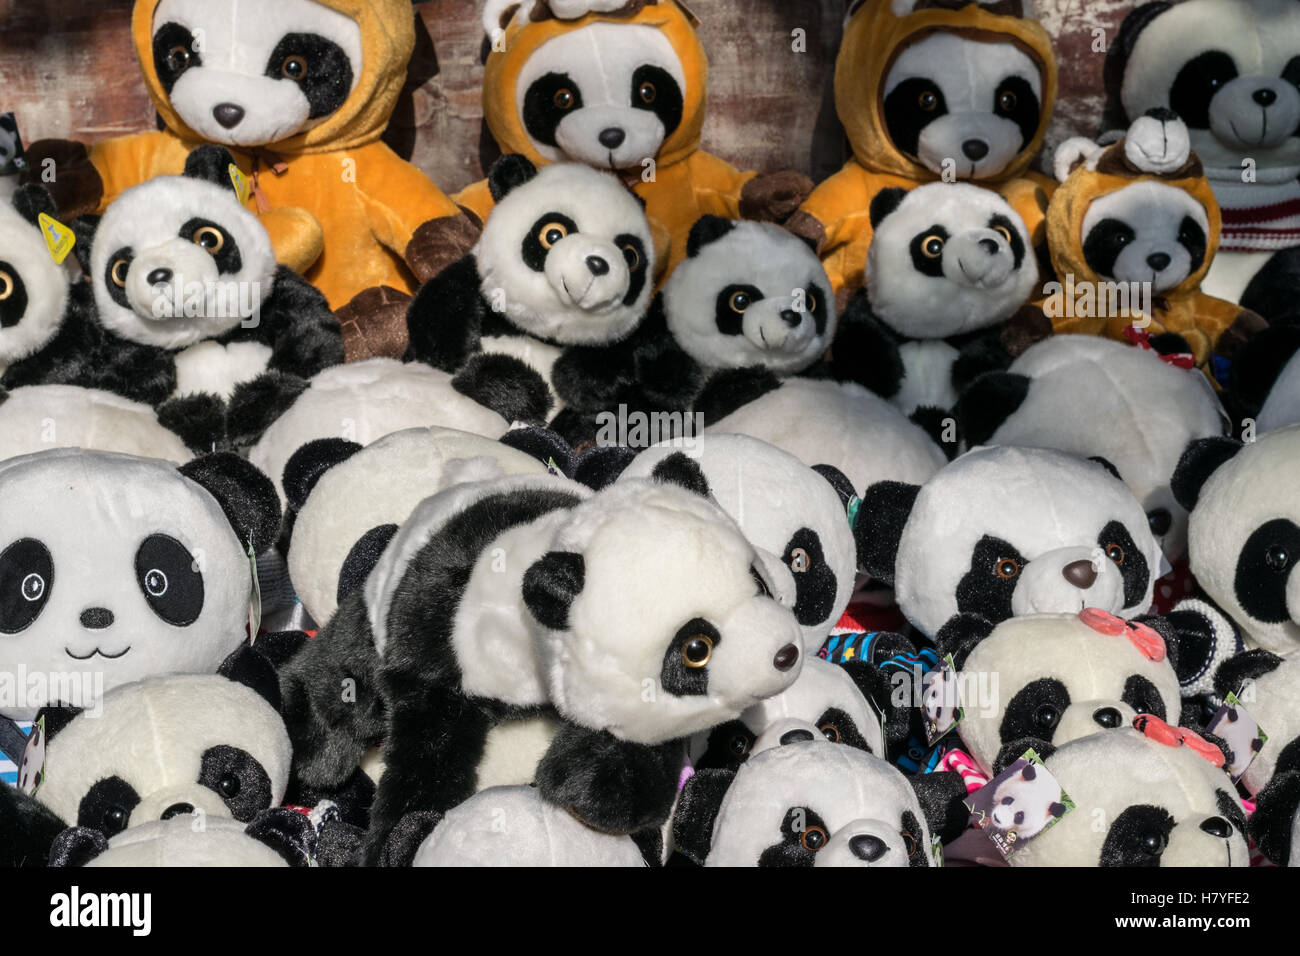 Plush panda dolls for sale outside Chengdu Panda Base in Sichuan province, China Stock Photo